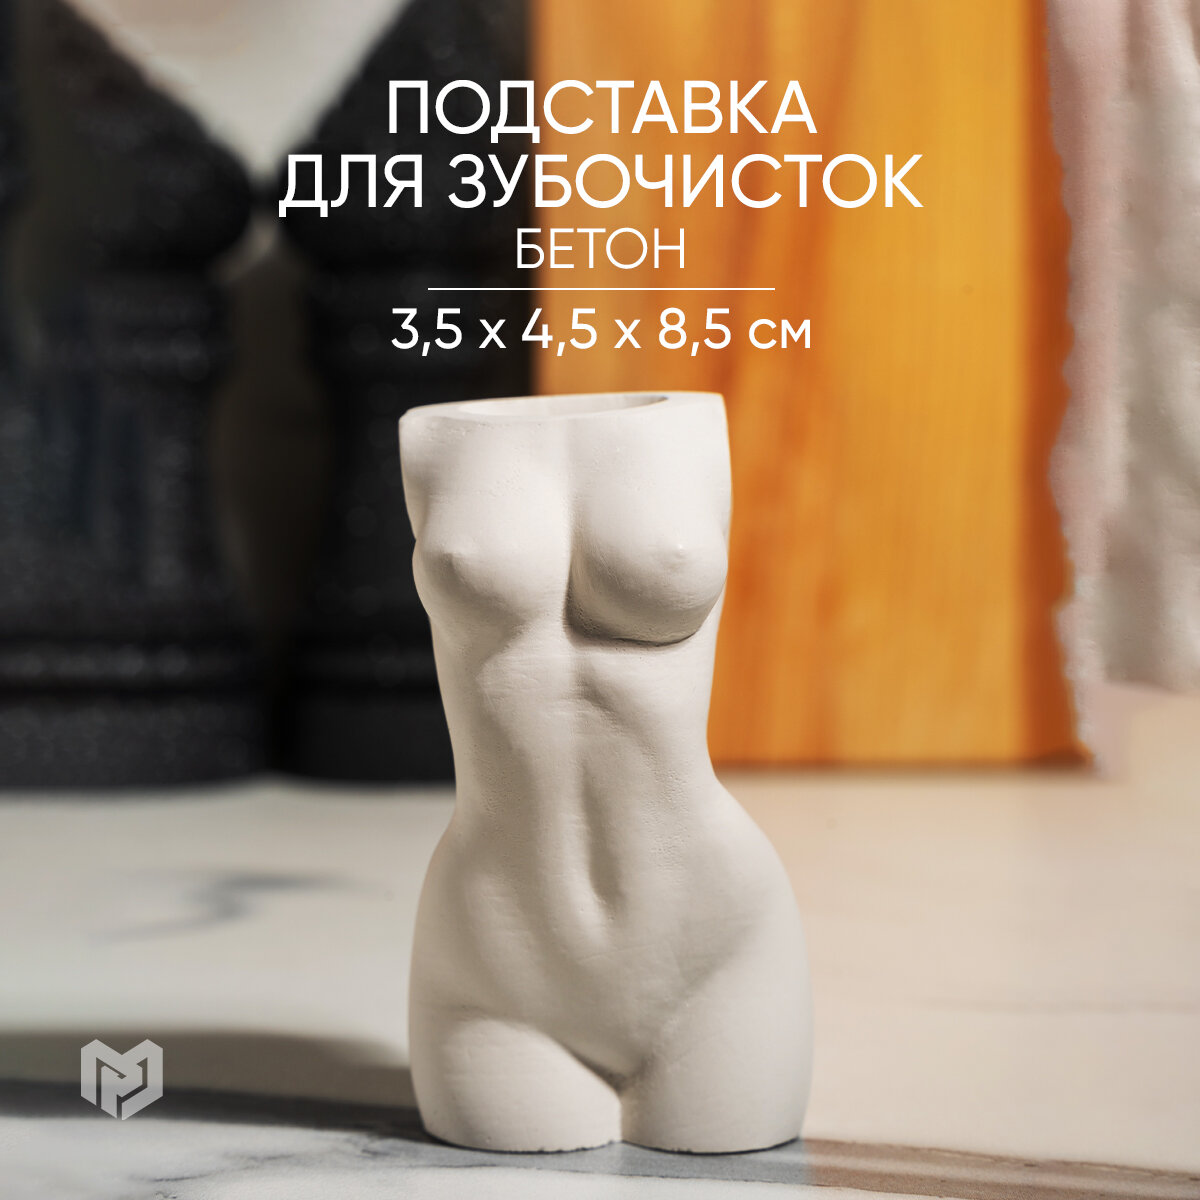 Подставка для зубочисток "Женское тело", белая, 4 см х 3,5 см х 8,5 см